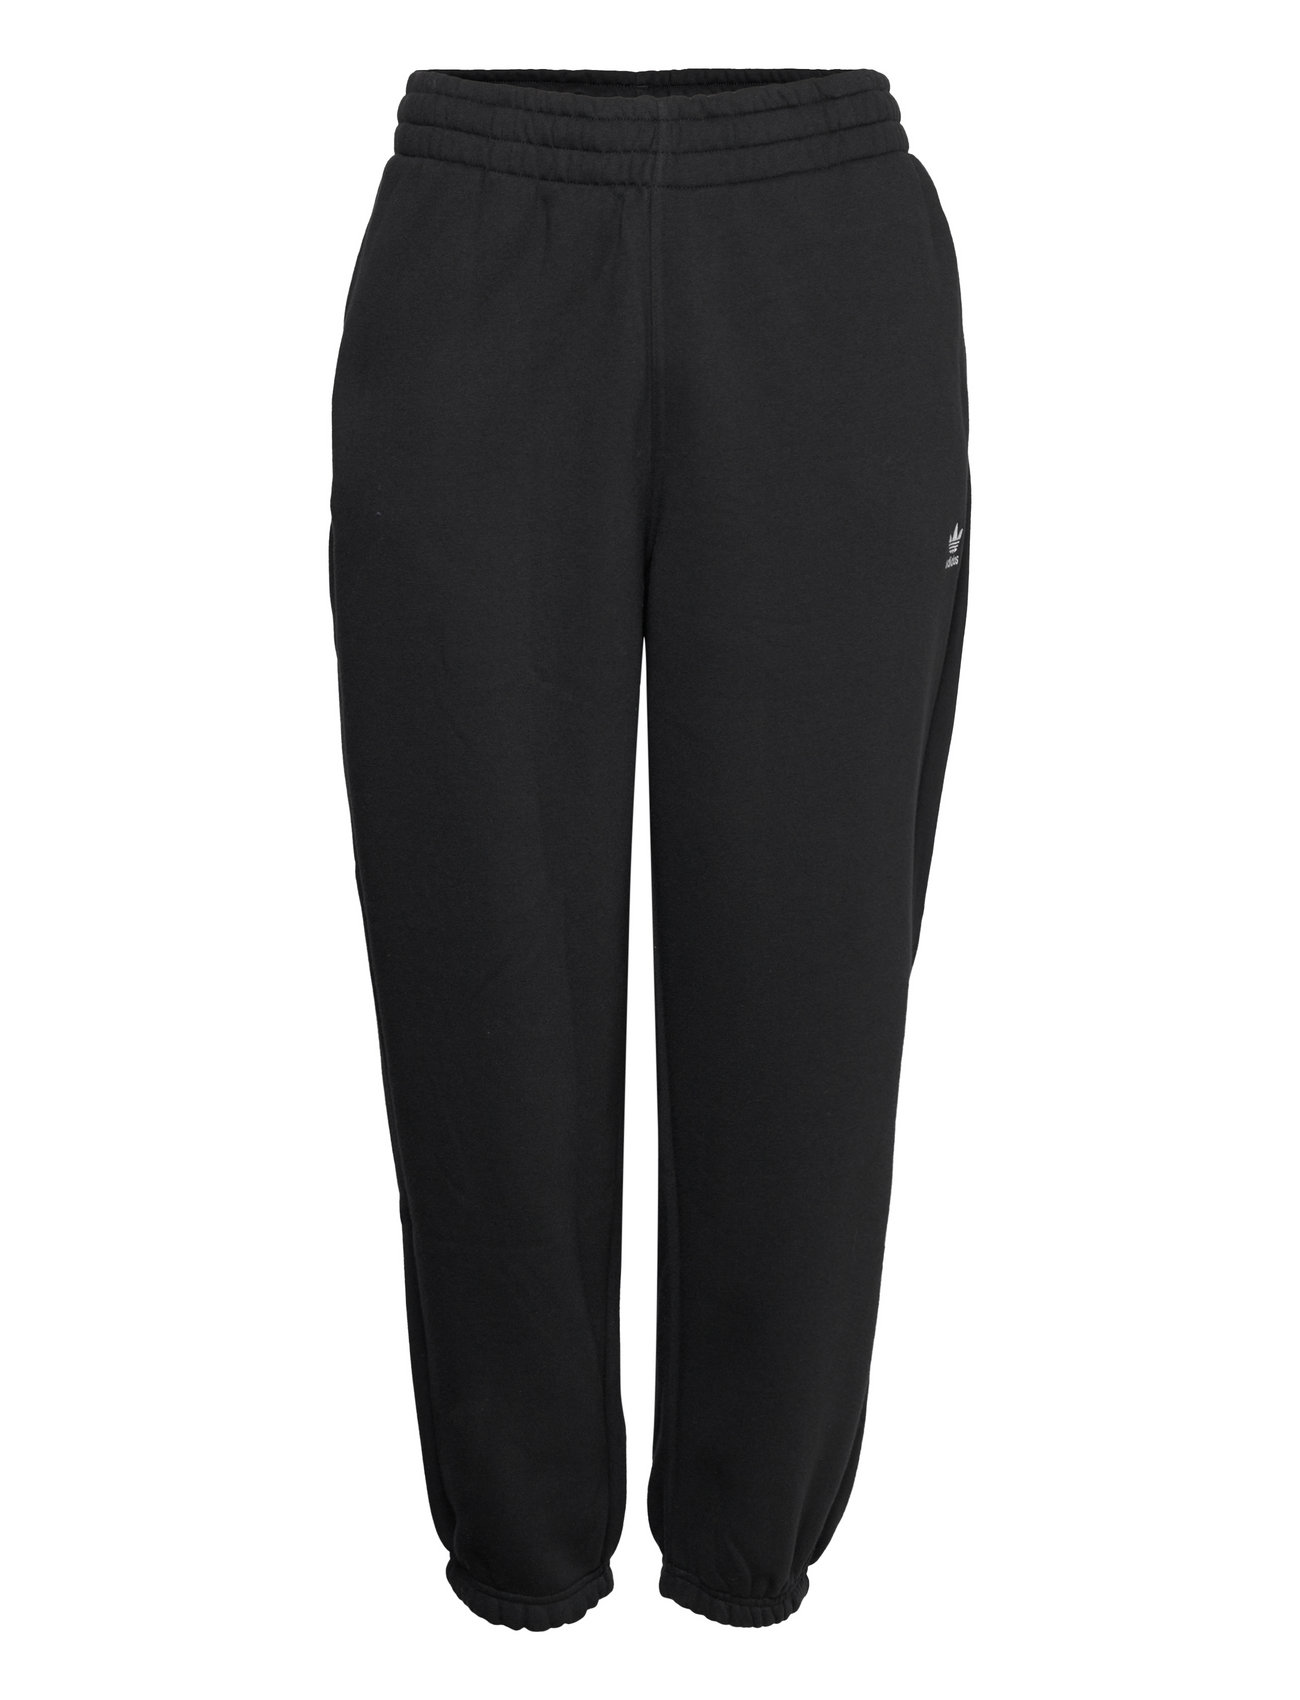 adidas Originals Pants (Black), (41.25 €) | Large selection of outlet ...